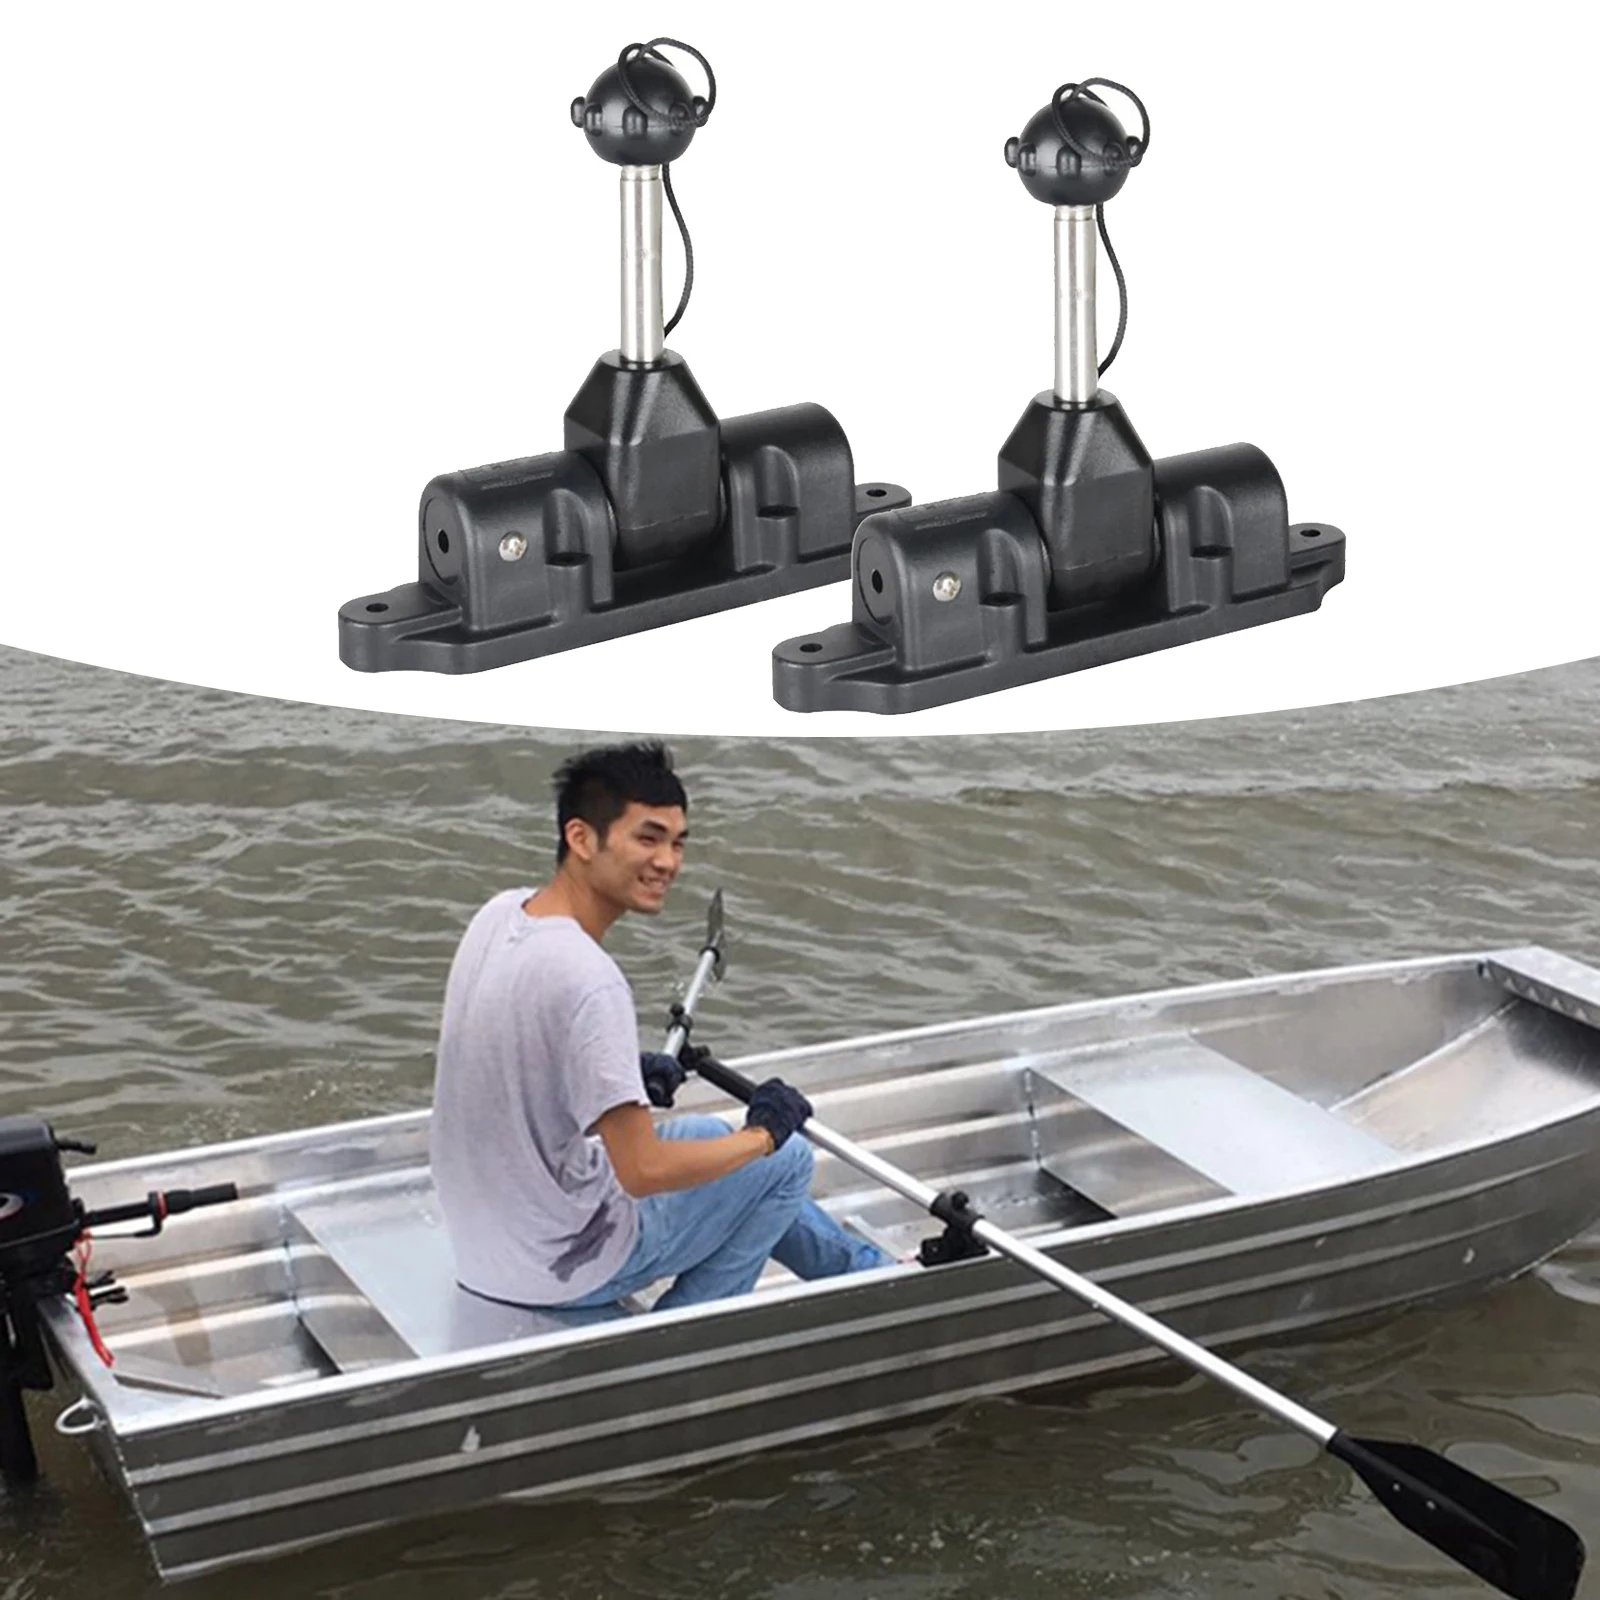 2Pcs Kayak Oar Lock Patch Paddle Lock Mount Boat Parts Hardware Accessories 